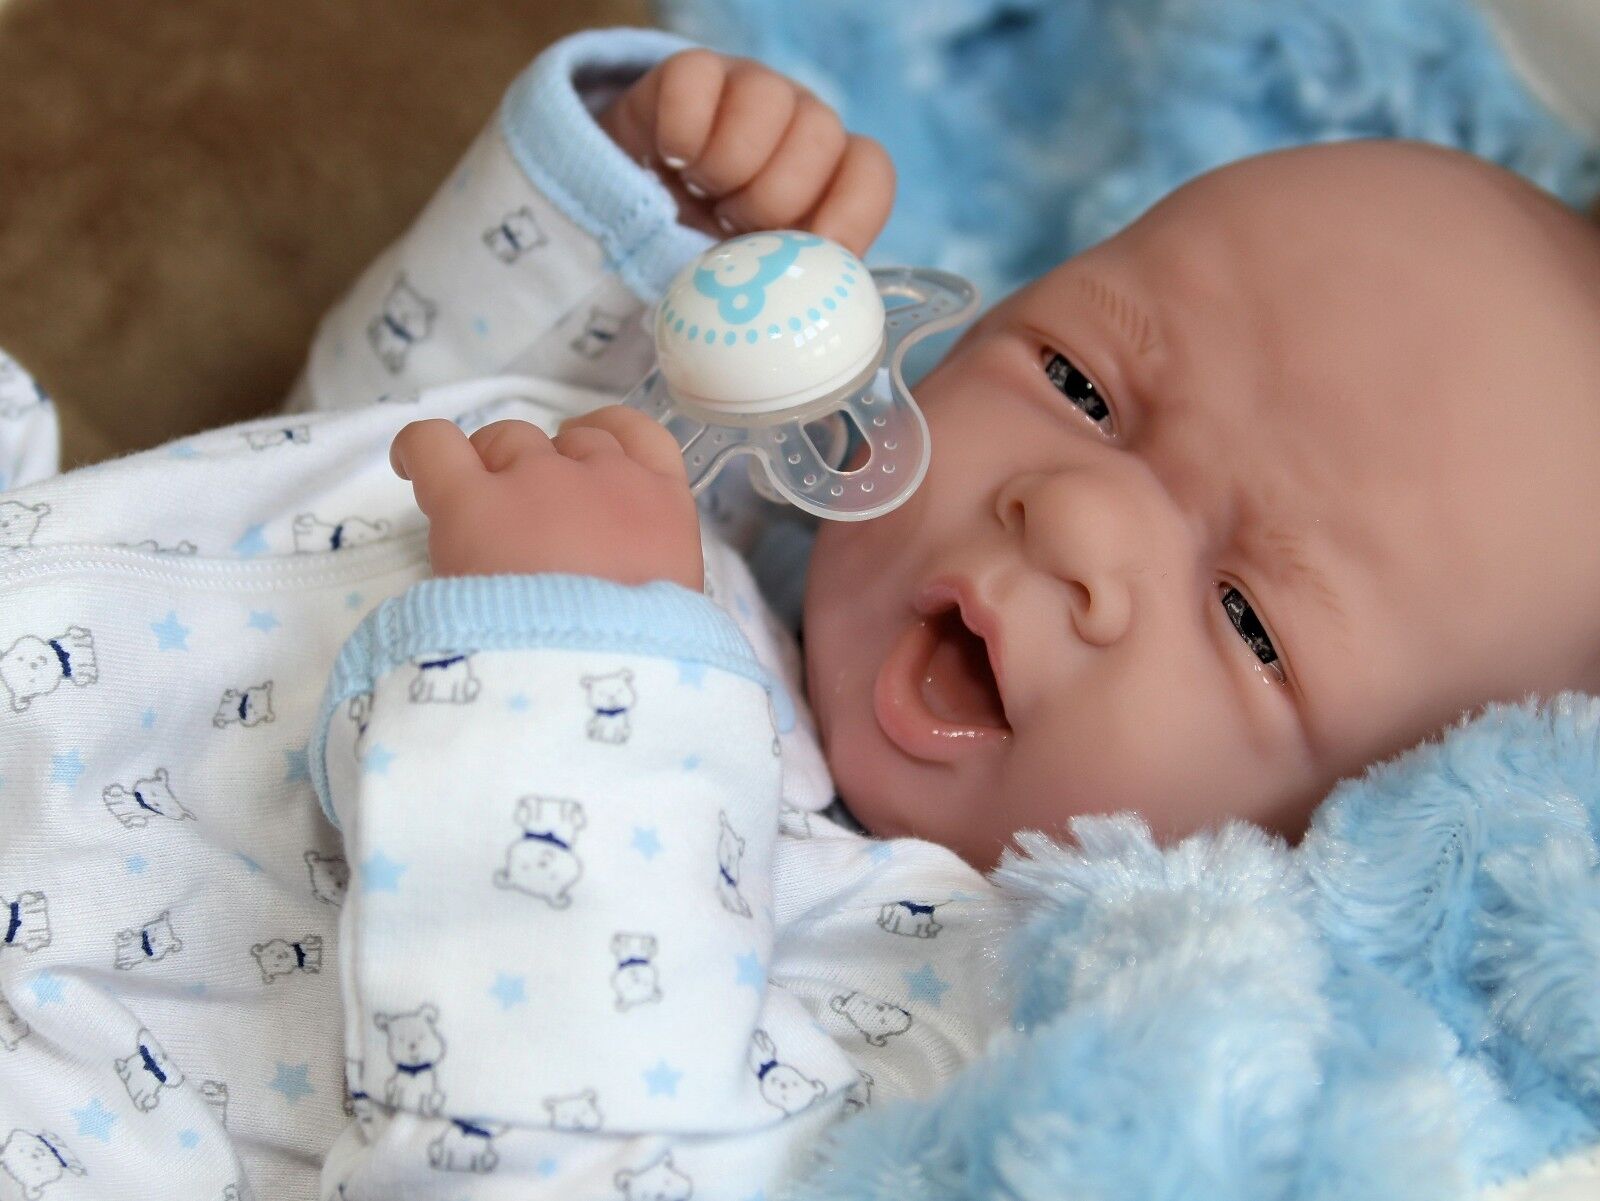 AWW! BABY BOY "DOGGIES"! Preemie Life Like Reborn Pacifier Doll + Extras Unbranded